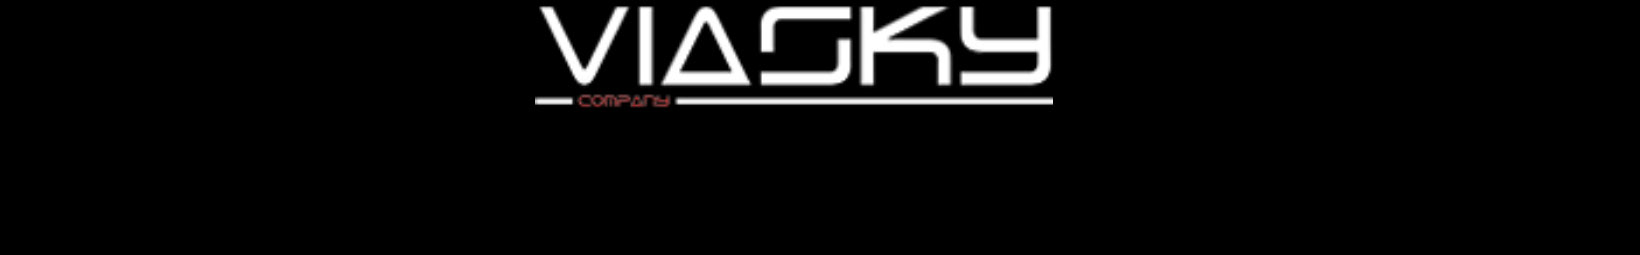 Viasky Company's profile banner